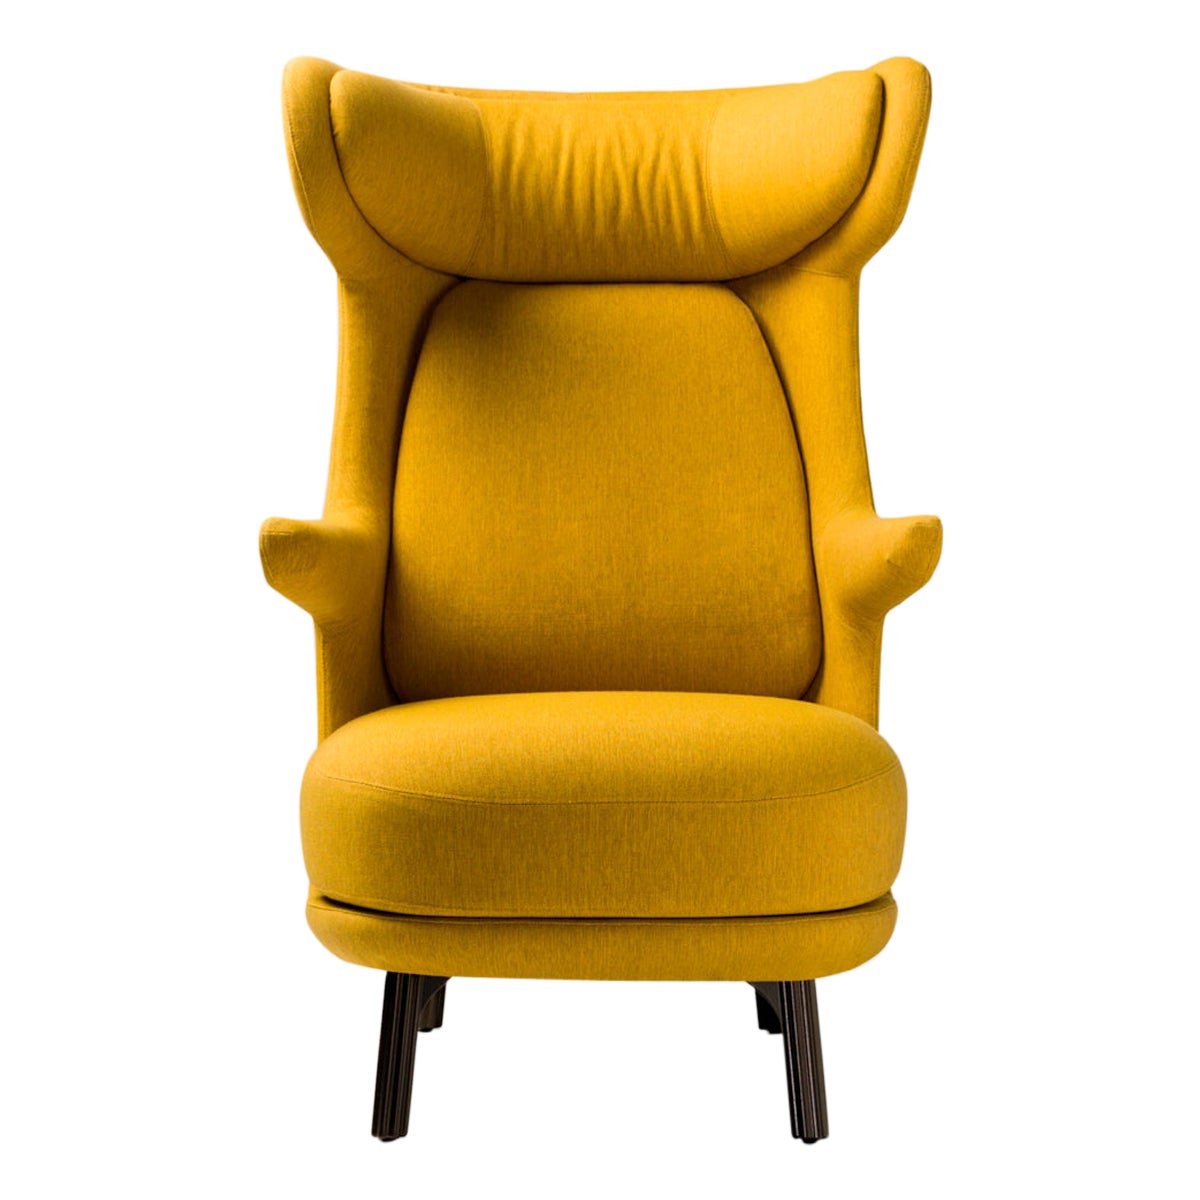 Jaime Hayon, Monocolor in Yellow Fabric Upholstery Dino Armchair